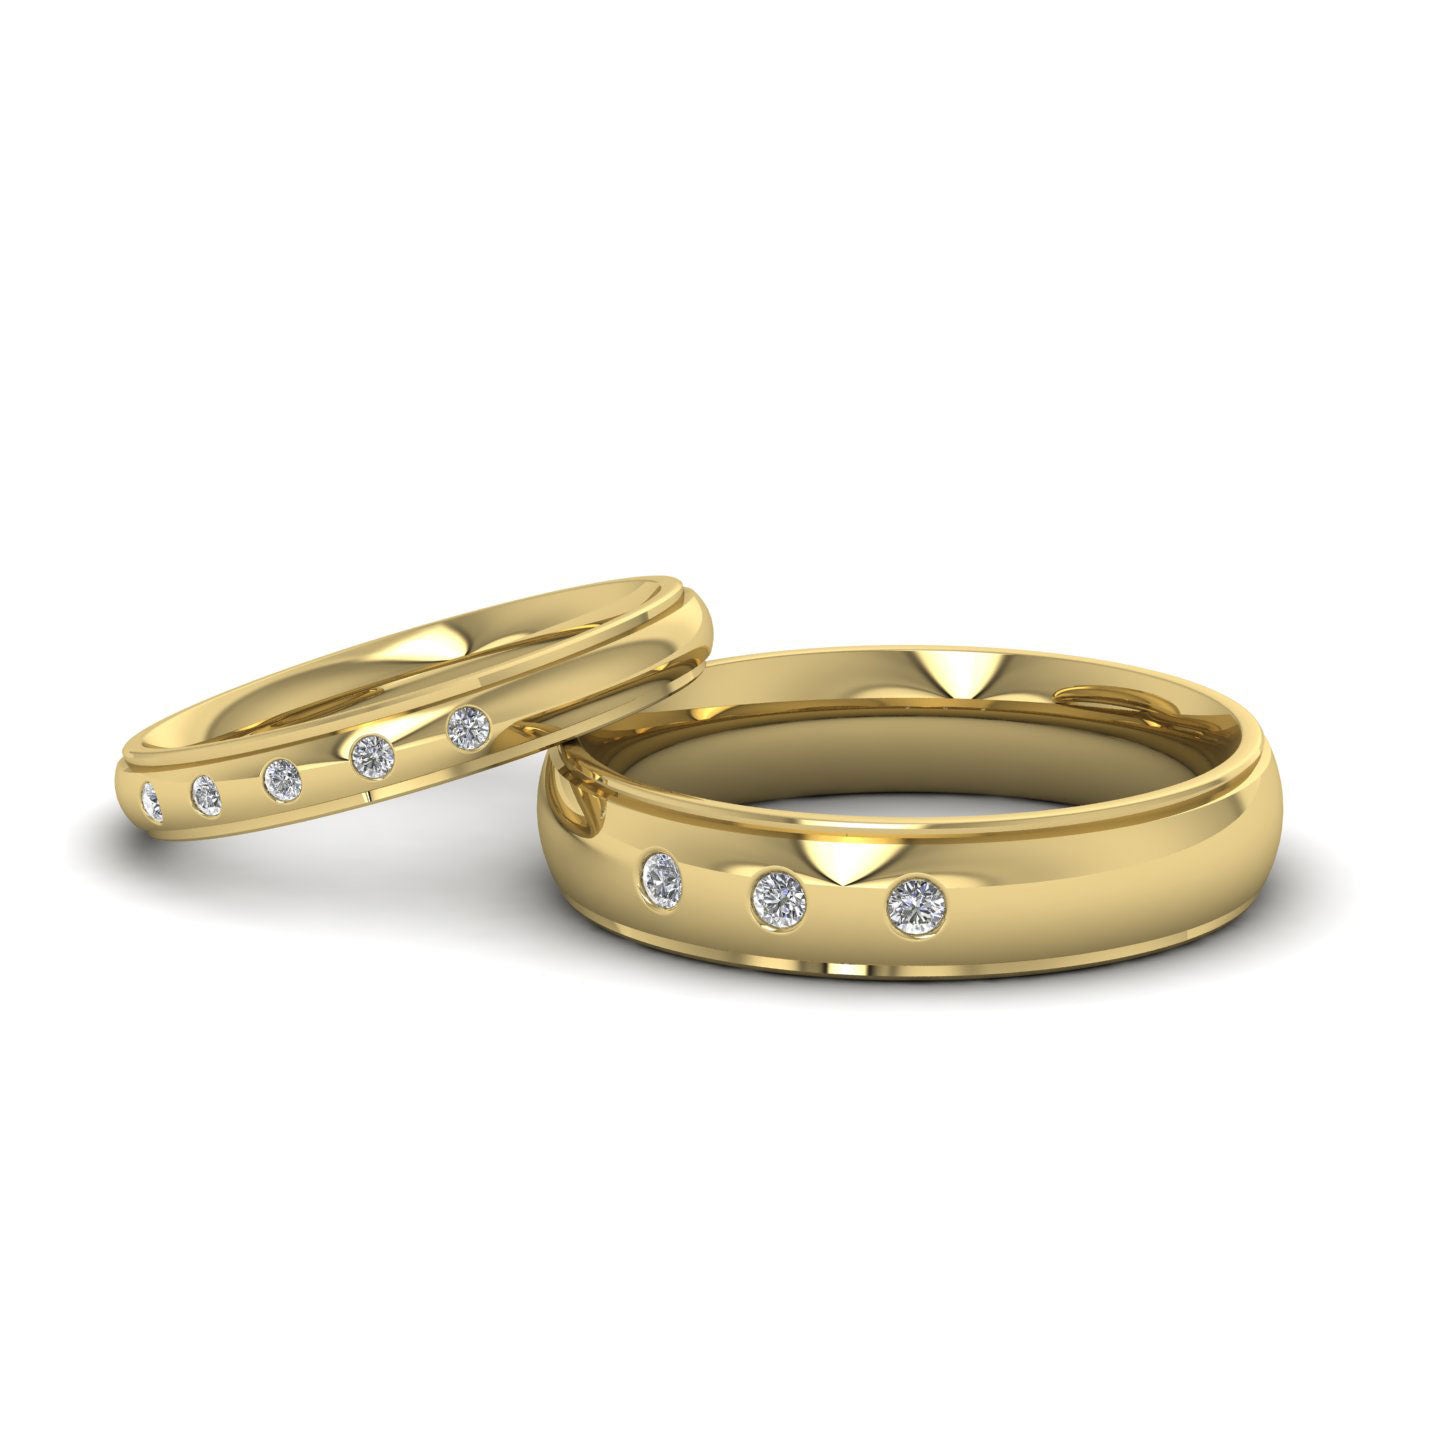 Line Pattern And Five Diamond Set 9ct Yellow Gold 3mm Wedding Ring